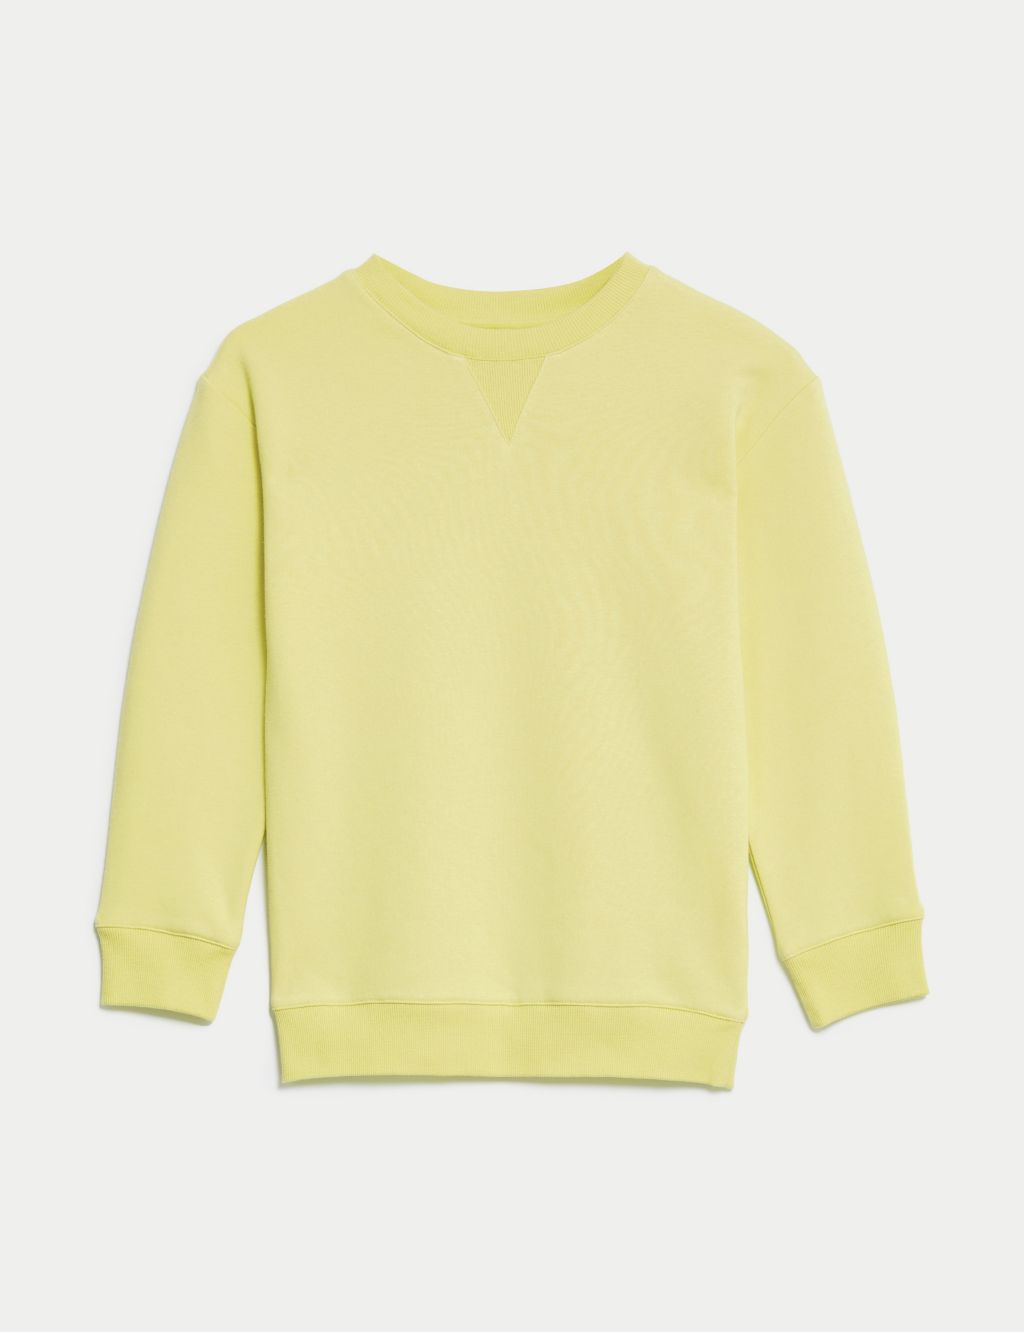 Cotton Rich Plain Sweatshirt (6-16 Yrs) image 2